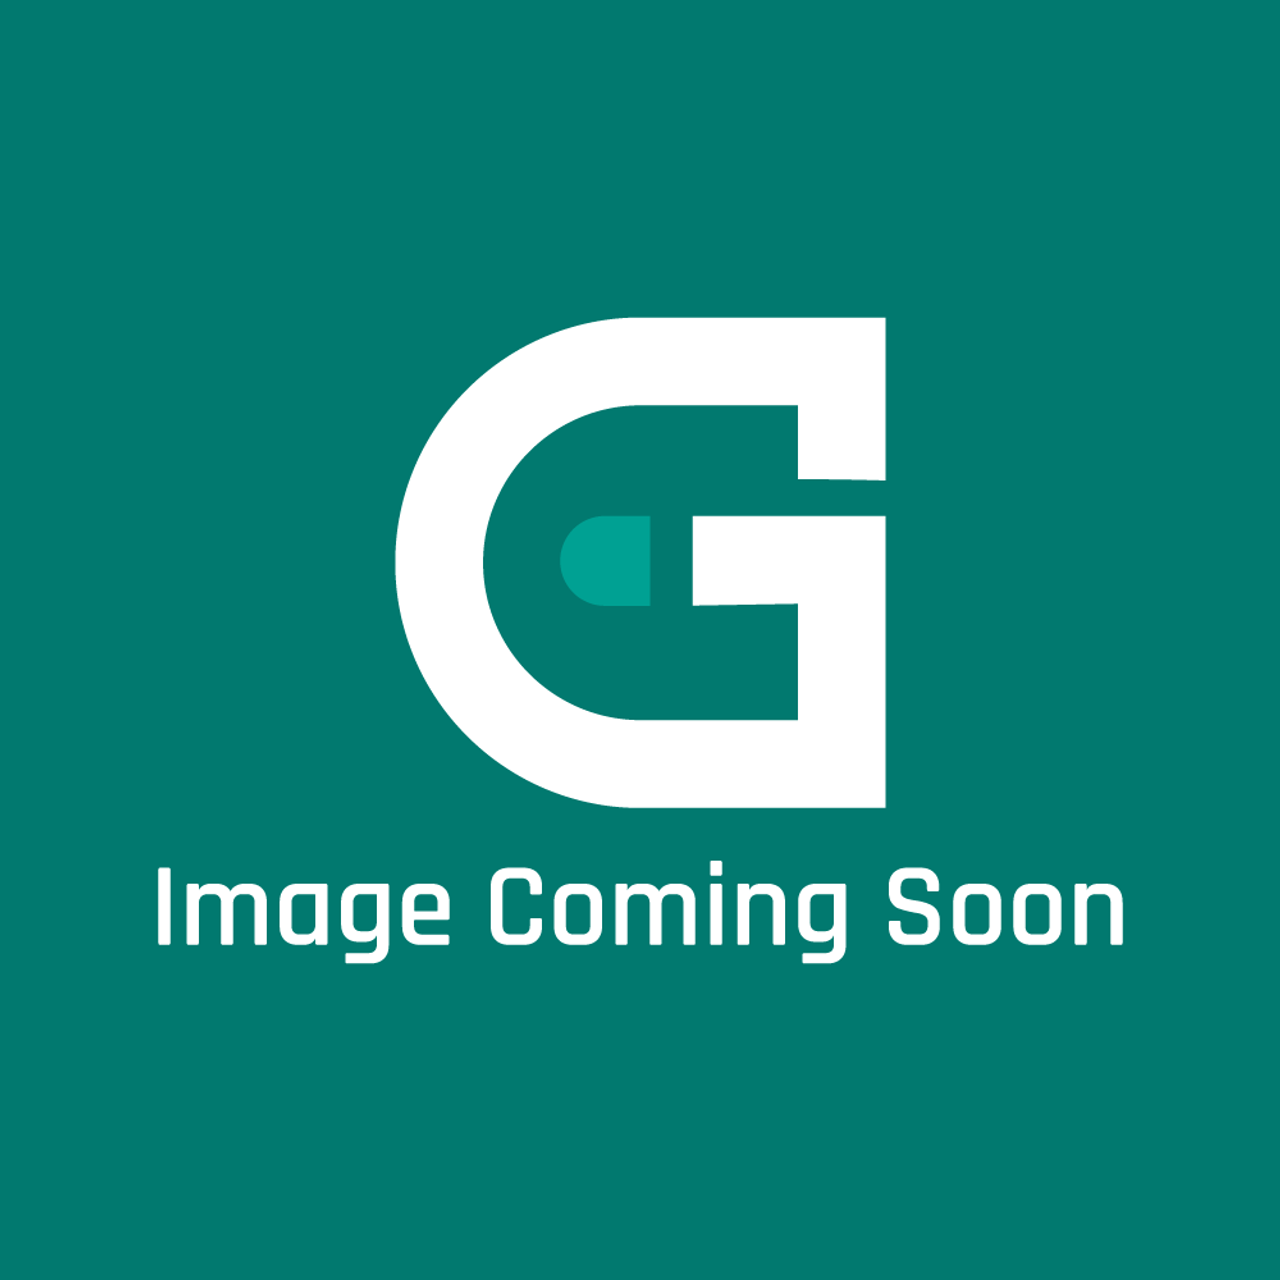 GE Appliances WB15K10084 - Handle - Image Coming Soon!